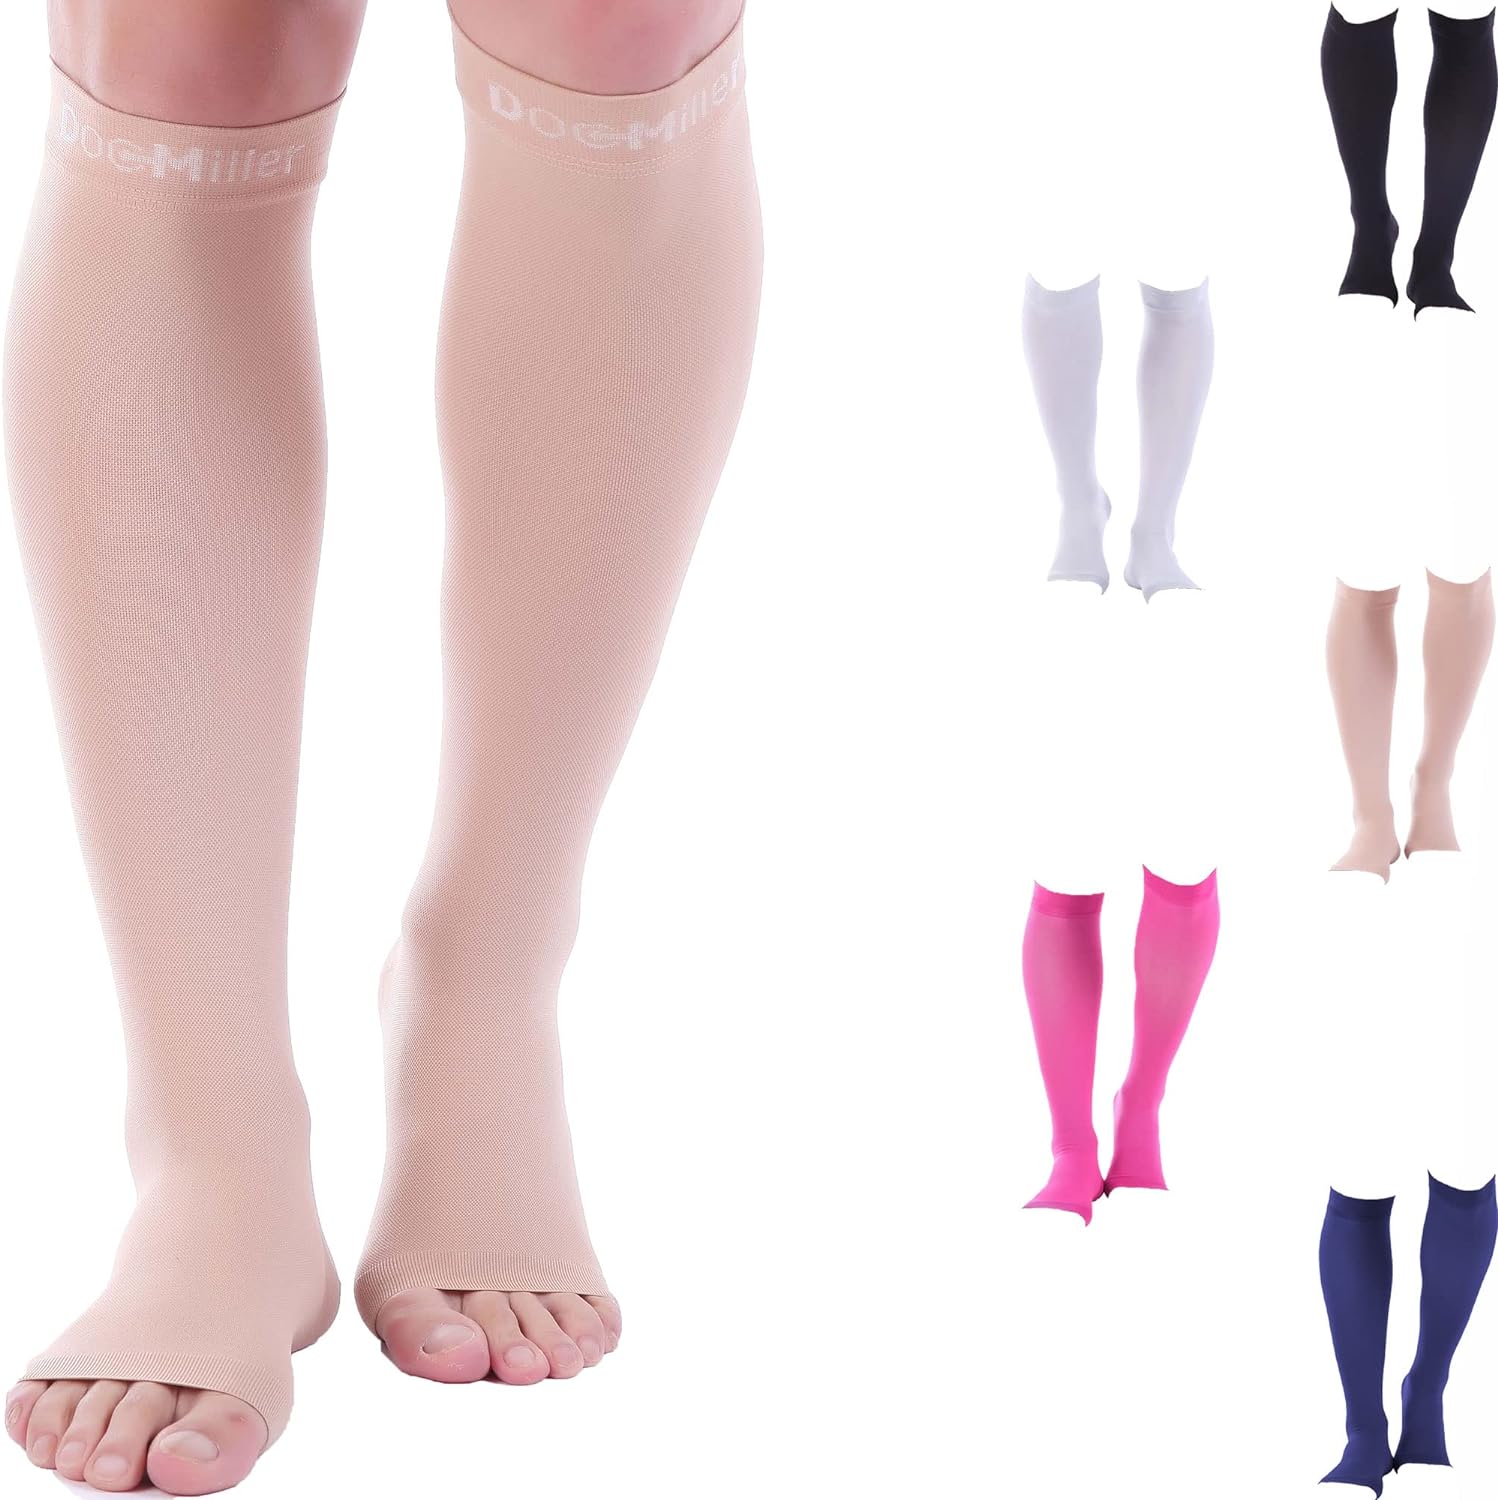 Doc Miller Open Toe Compression Socks for Women & Men 8-15 mmHg, 1 Pair, Support Shin Splints, Varicose Veins Recovery